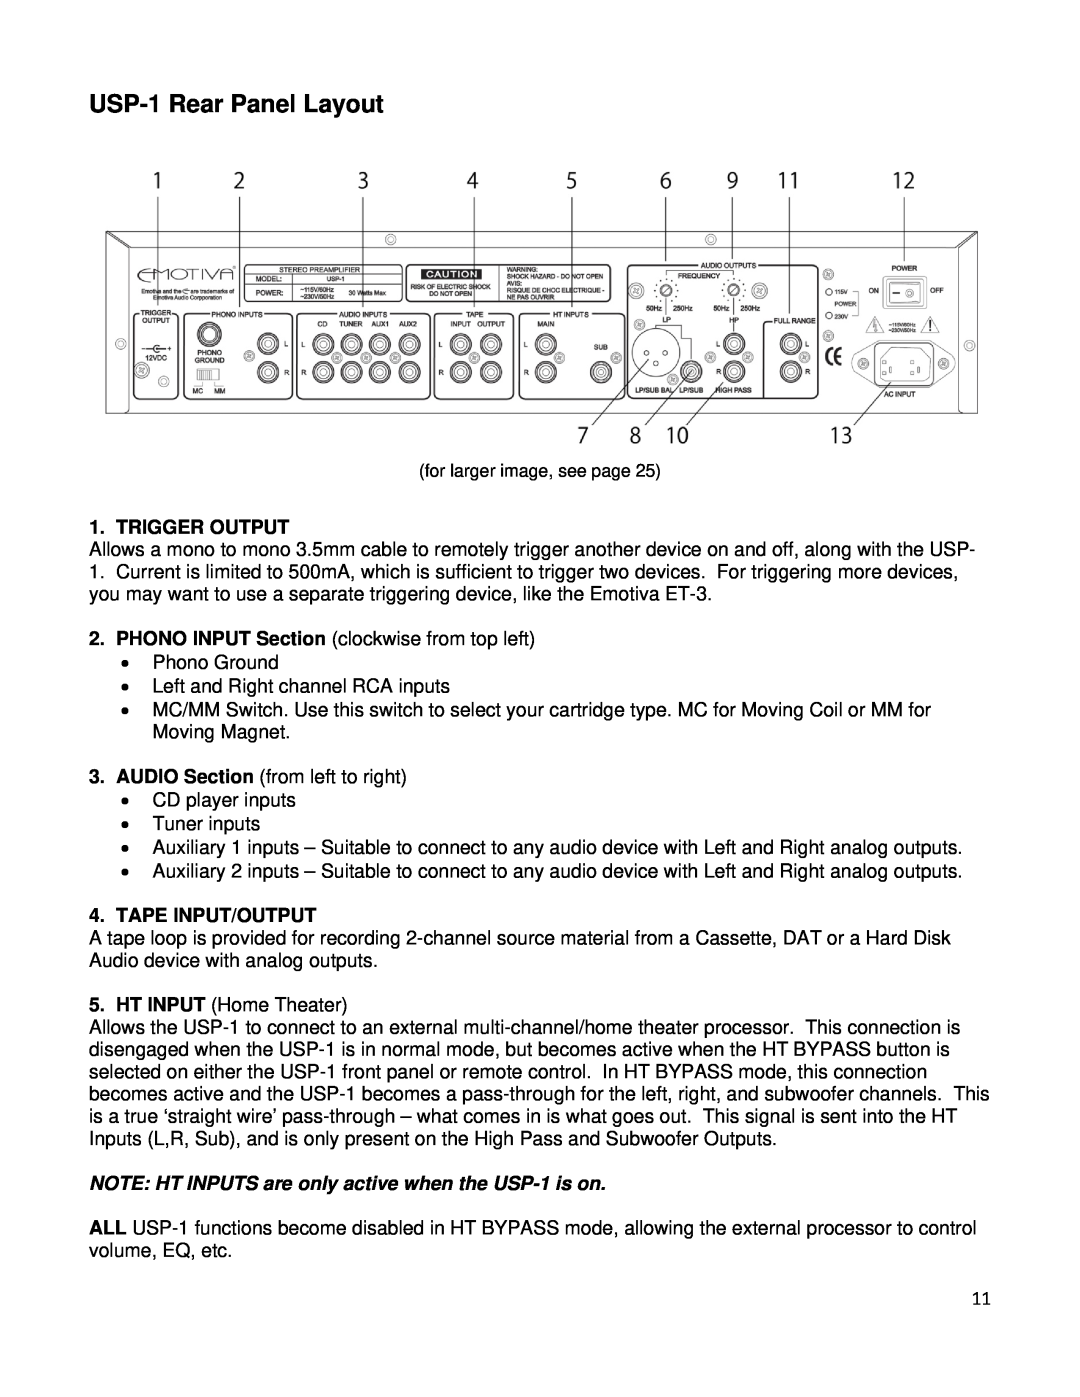 Emotiva manual USP-1Rear Panel Layout, Trigger Output, Tape Input/Output 